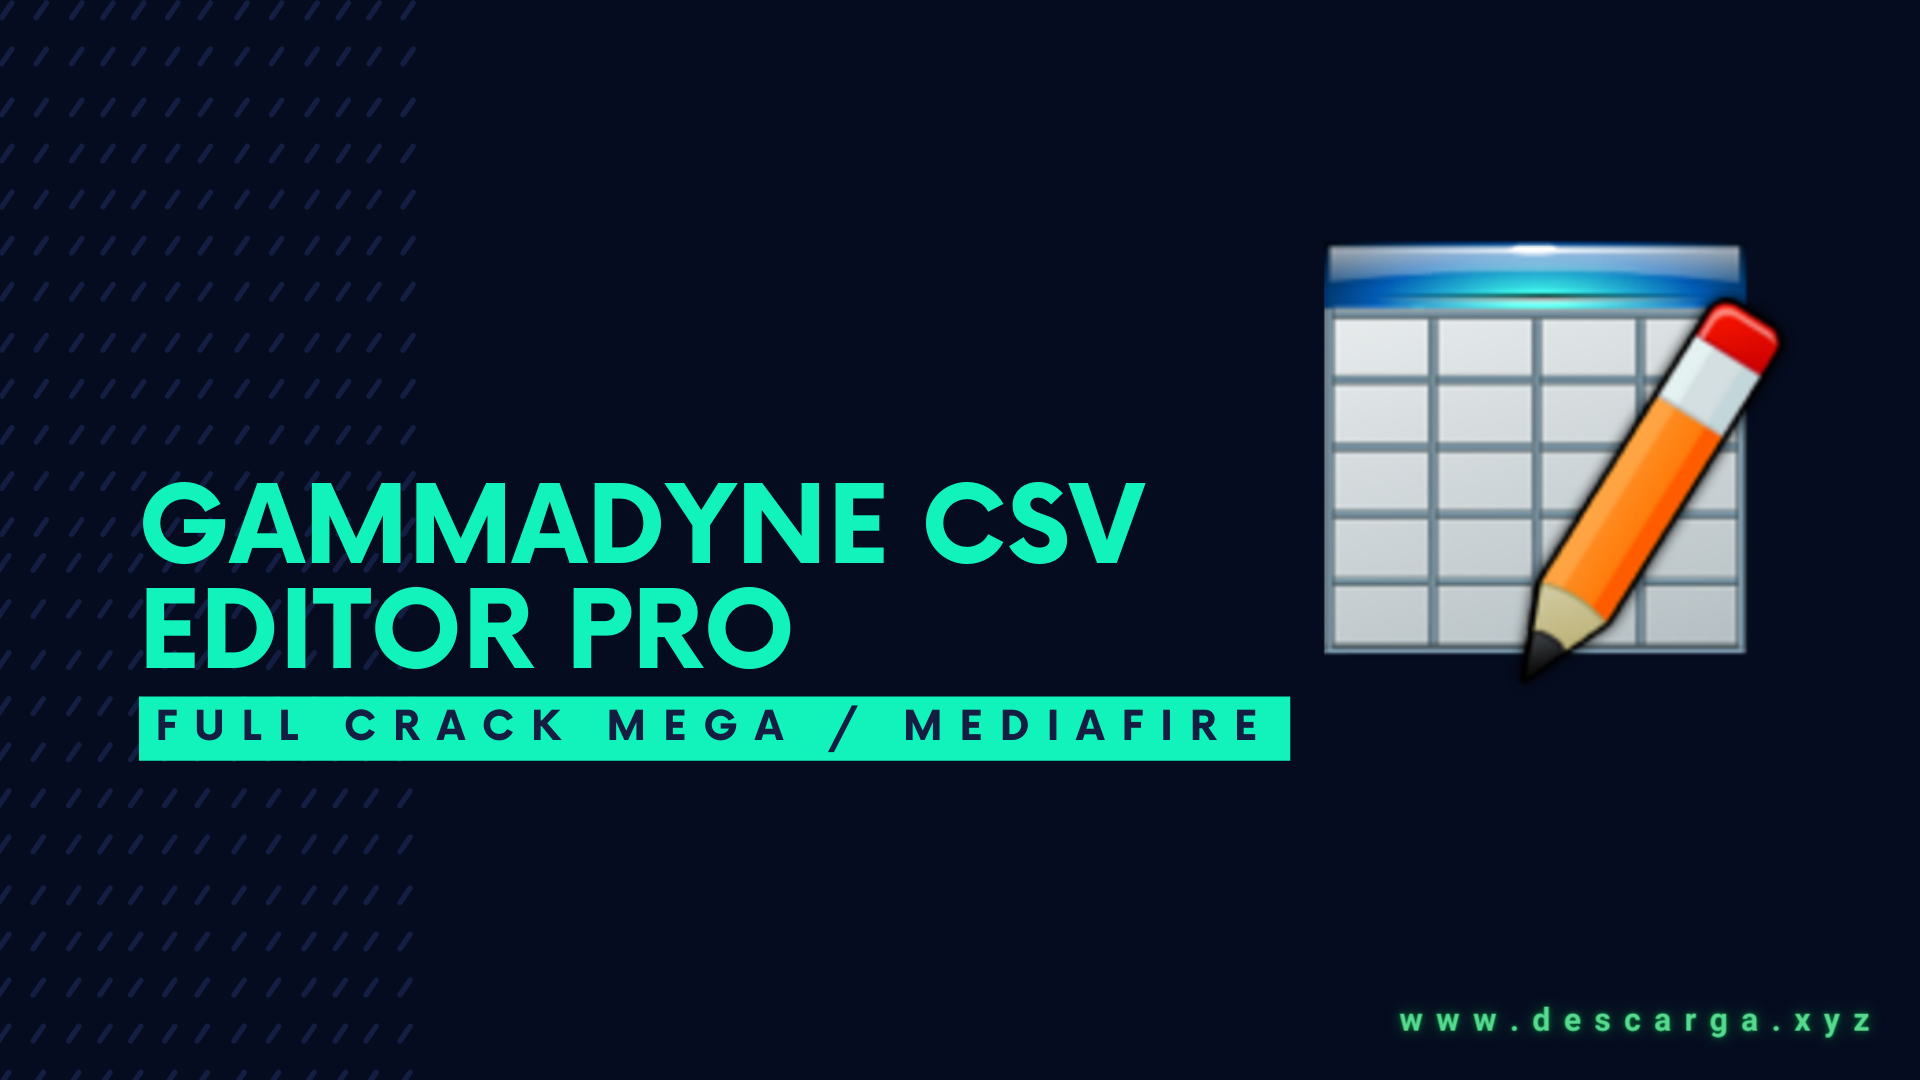 Download 🥇 Gammadyne CSV Editor Pro FULL! v28 GRATIS! ✅ MEGA